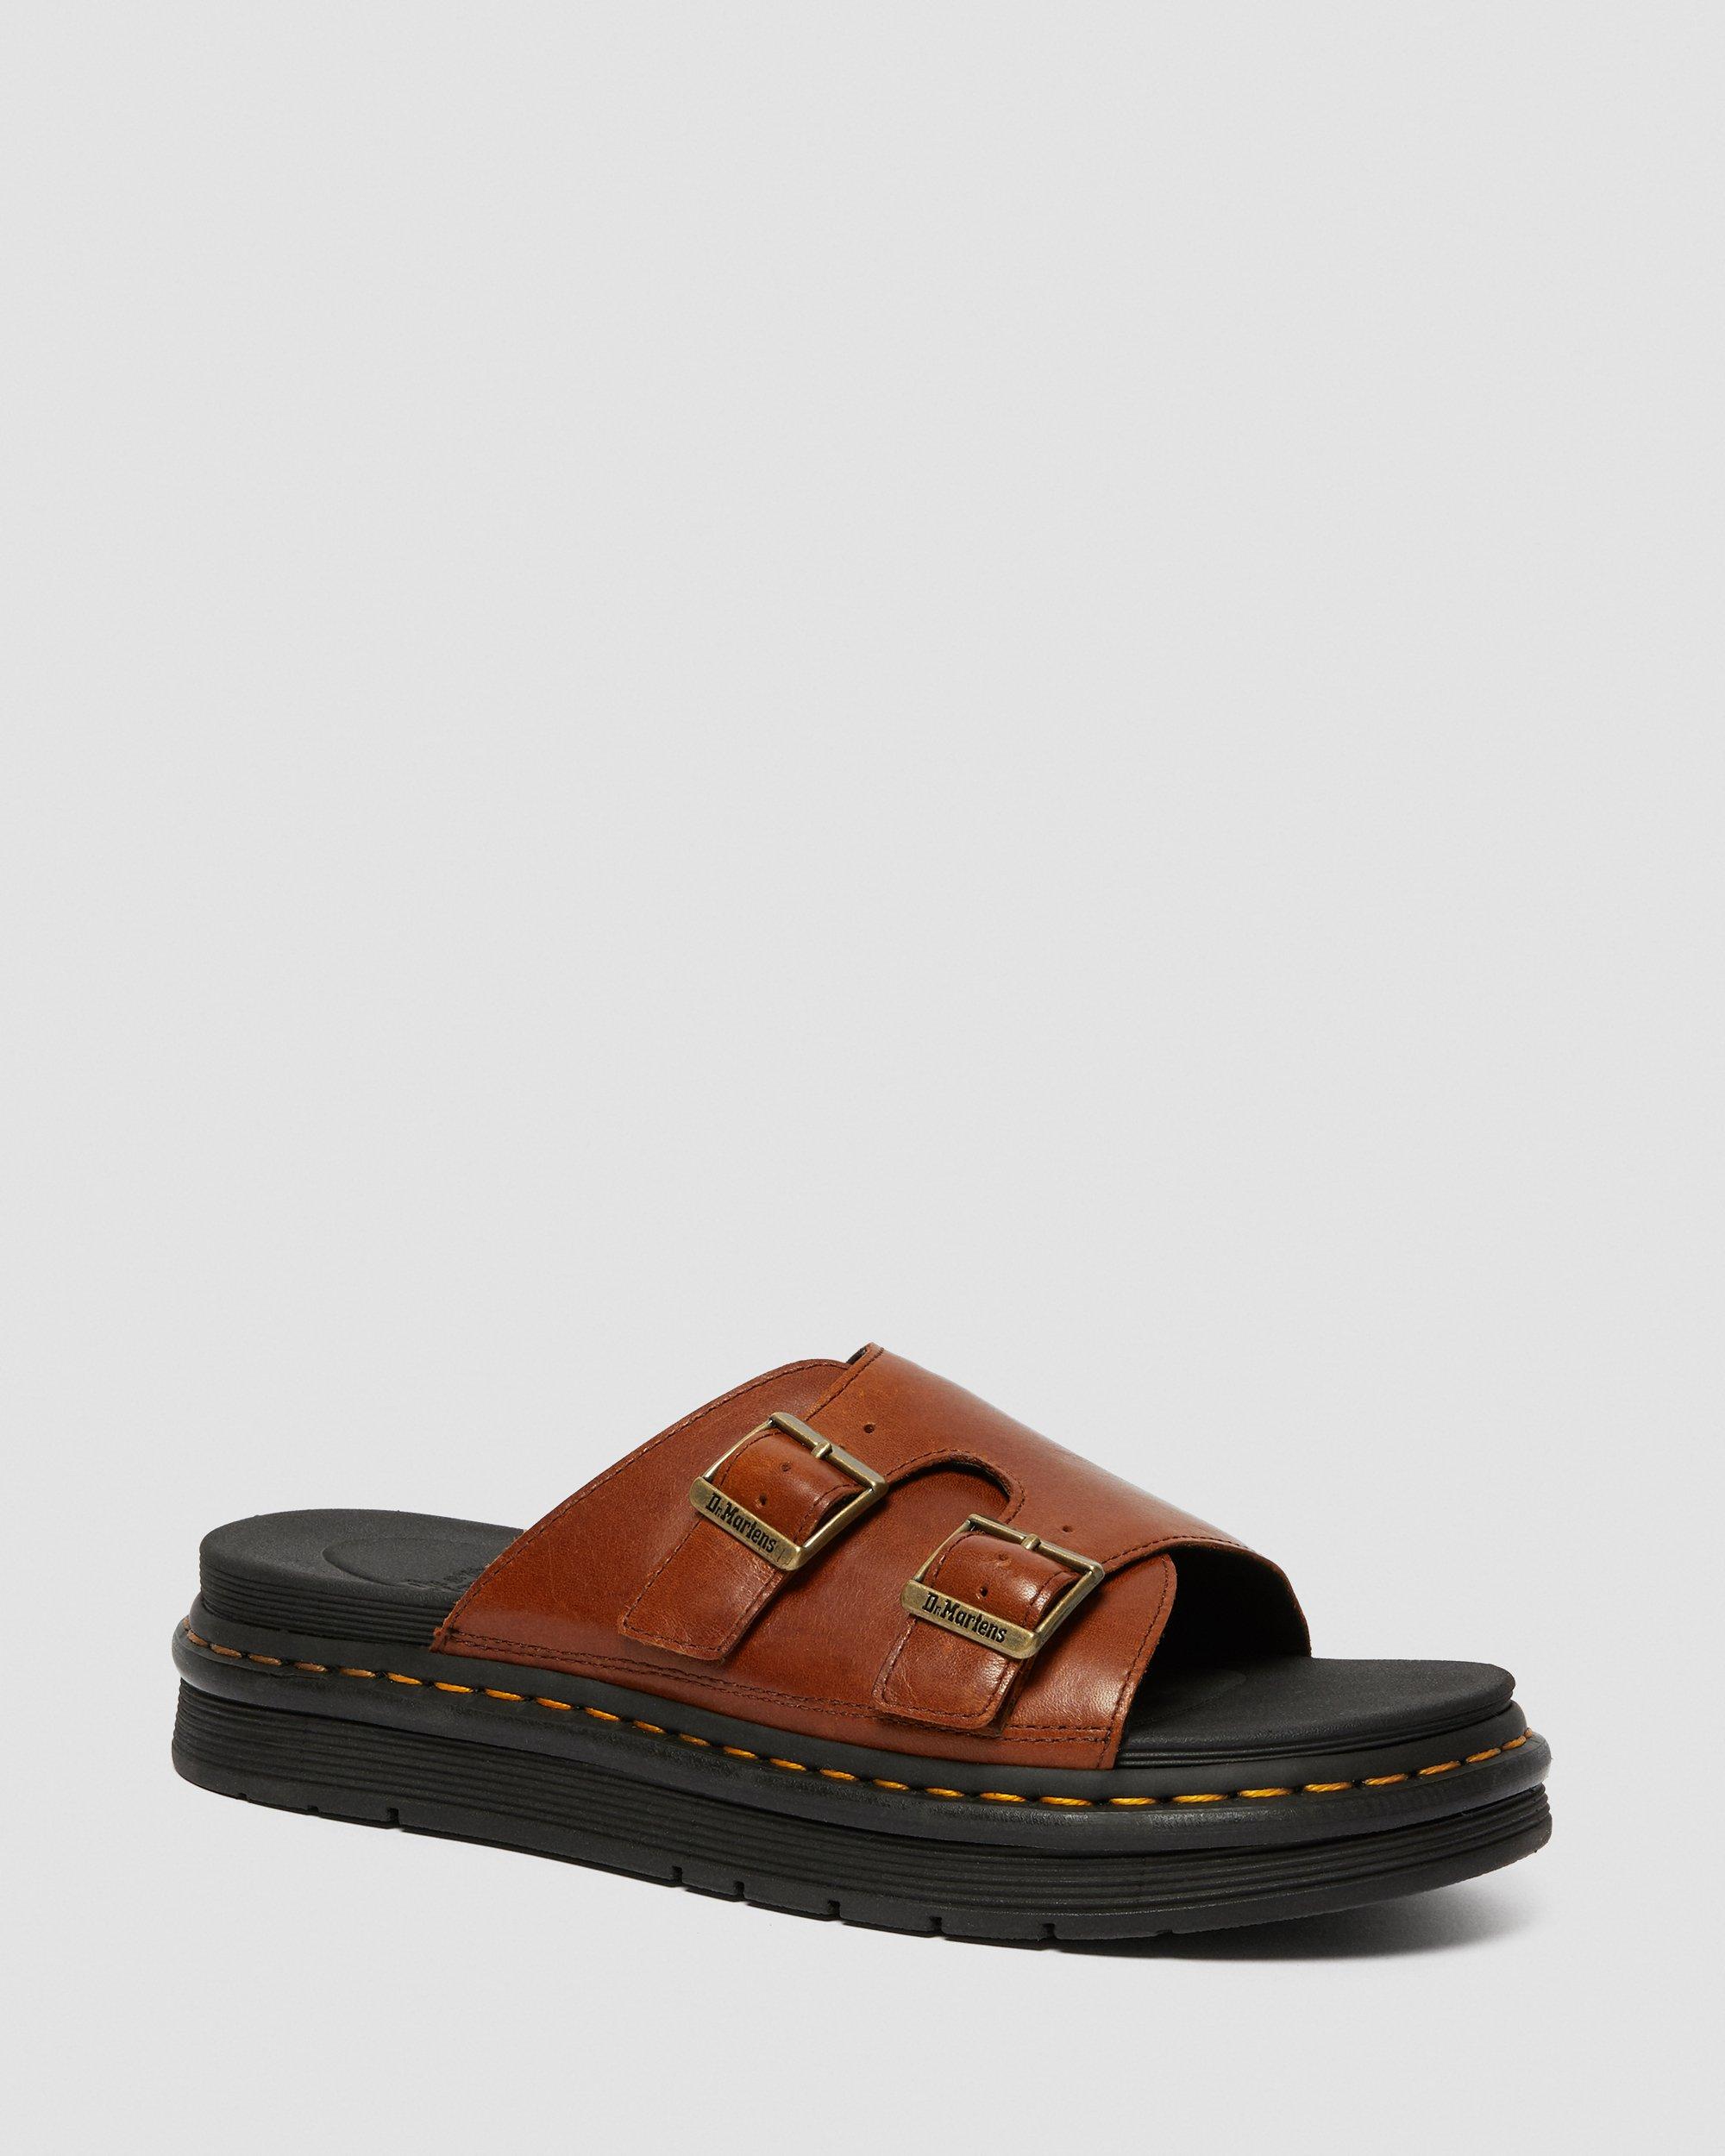 Dax Men's Luxor Leather Slide Sandals in Tan